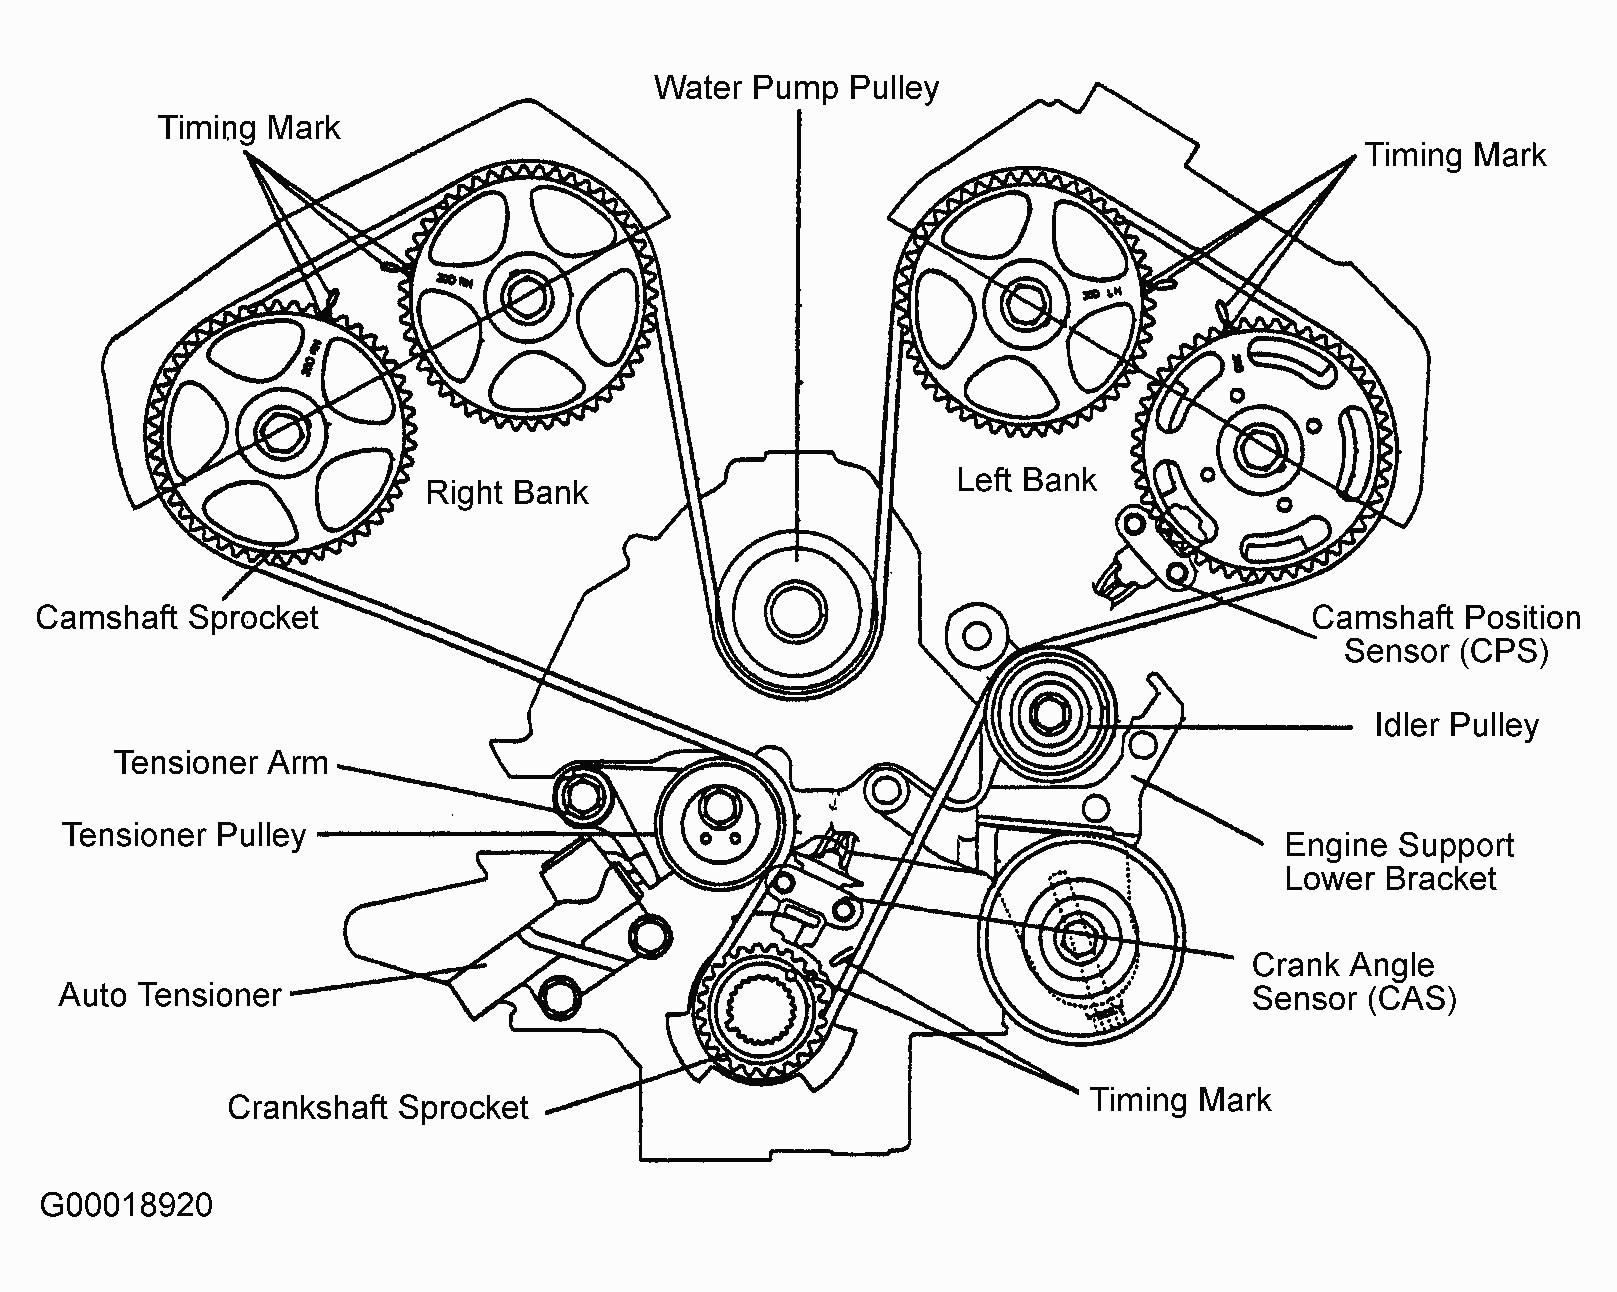 2003 Hyundai Santa Fe Engine Diagram 48 Better Hyundai Santa Fe Timing Belt Graphy Of 2003 Hyundai Santa Fe Engine Diagram